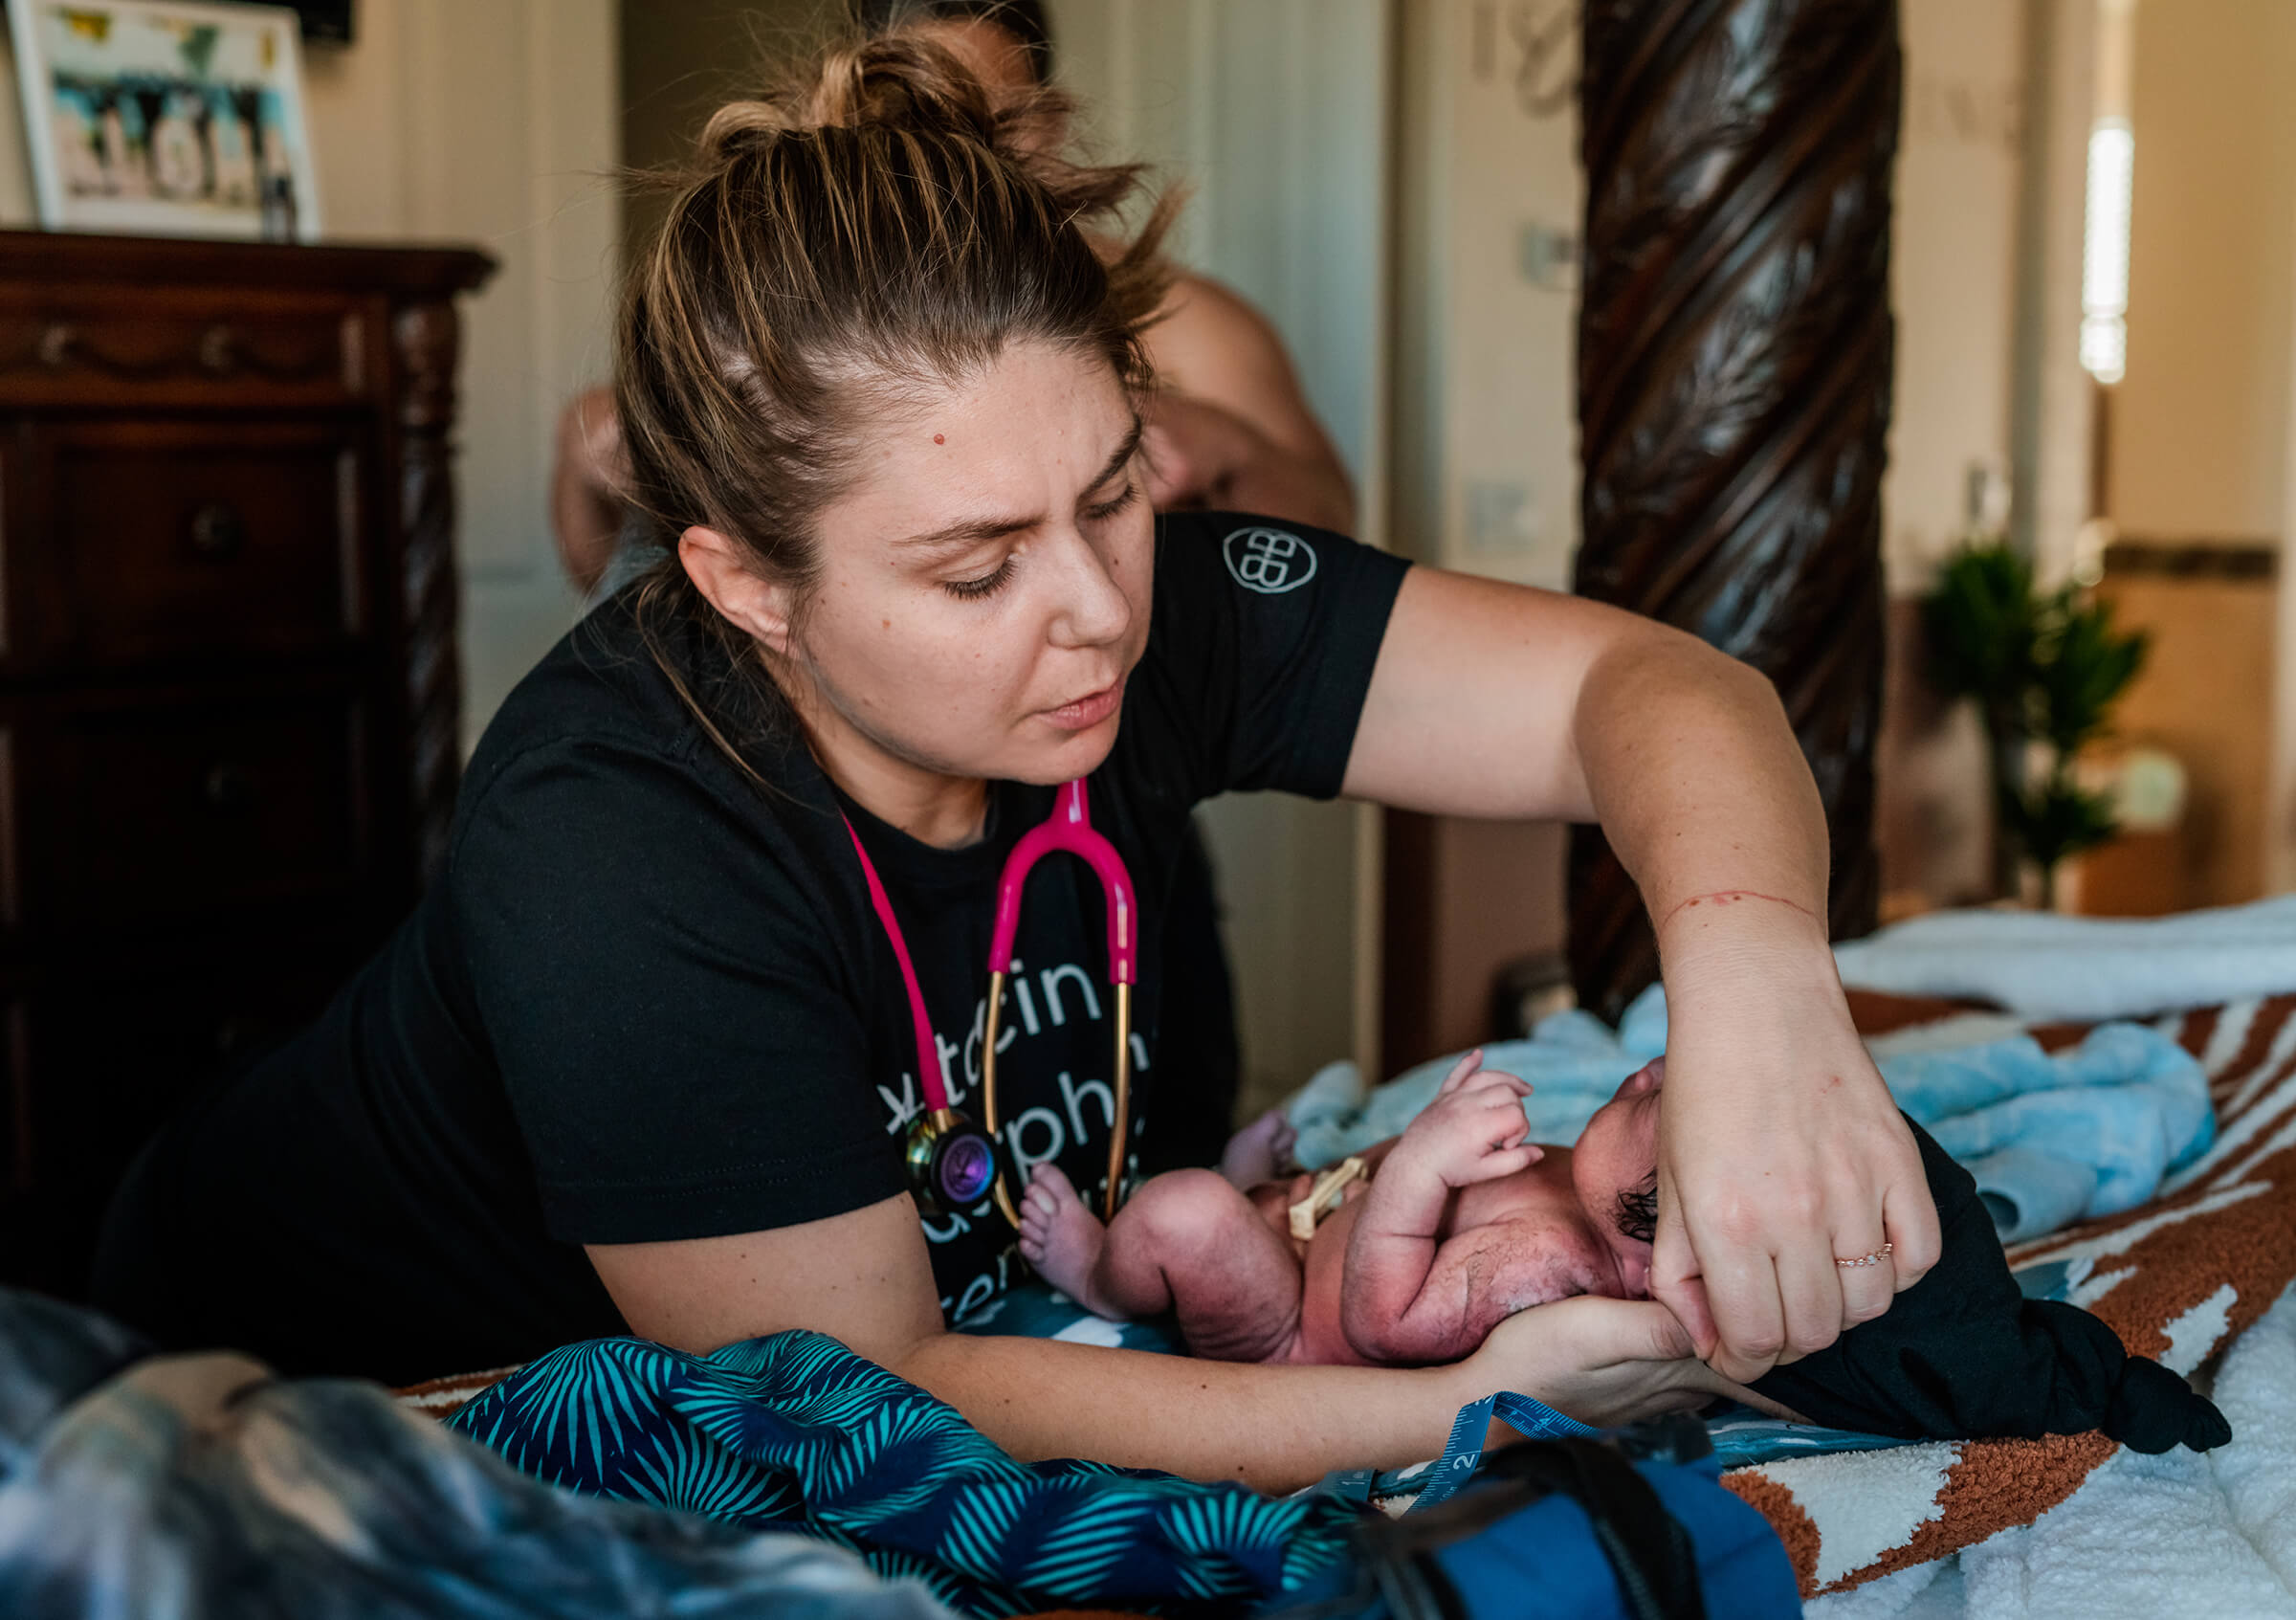 newborn measurements after a Las Vegas home birth. 